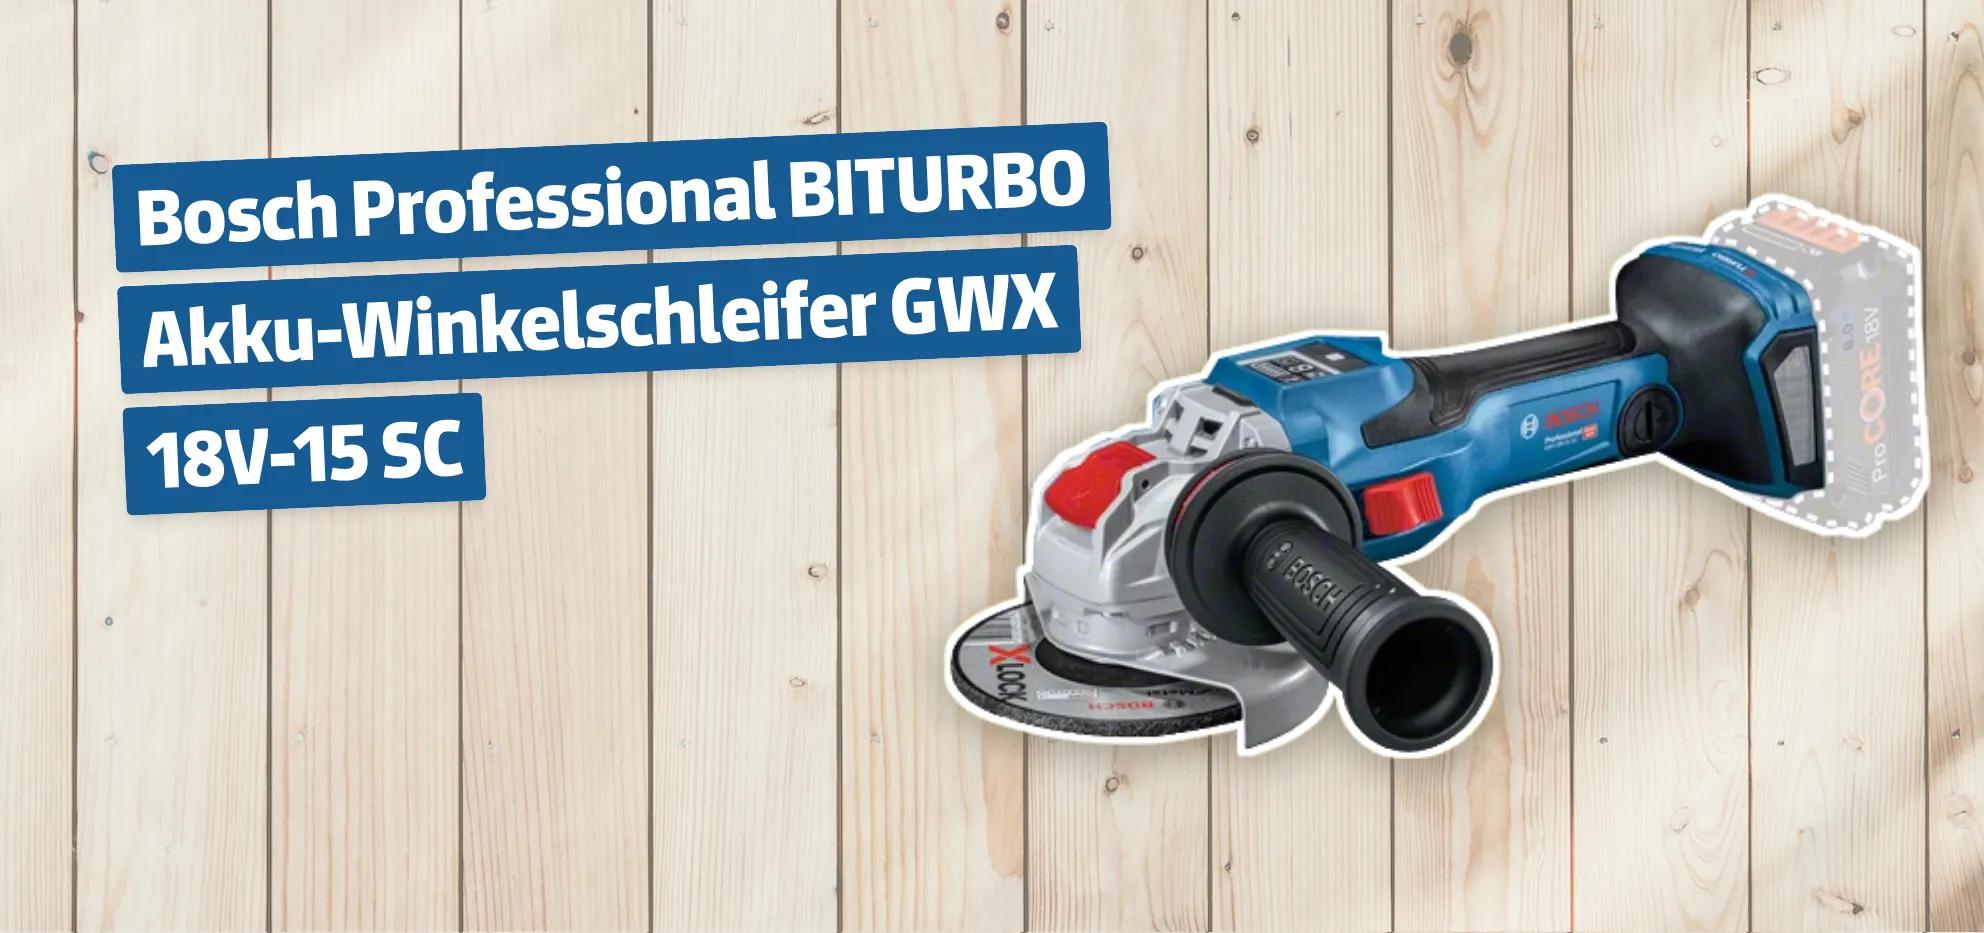 Bosch Professional BITURBO Akku-Winkelschleifer GWX 18V-15 SC